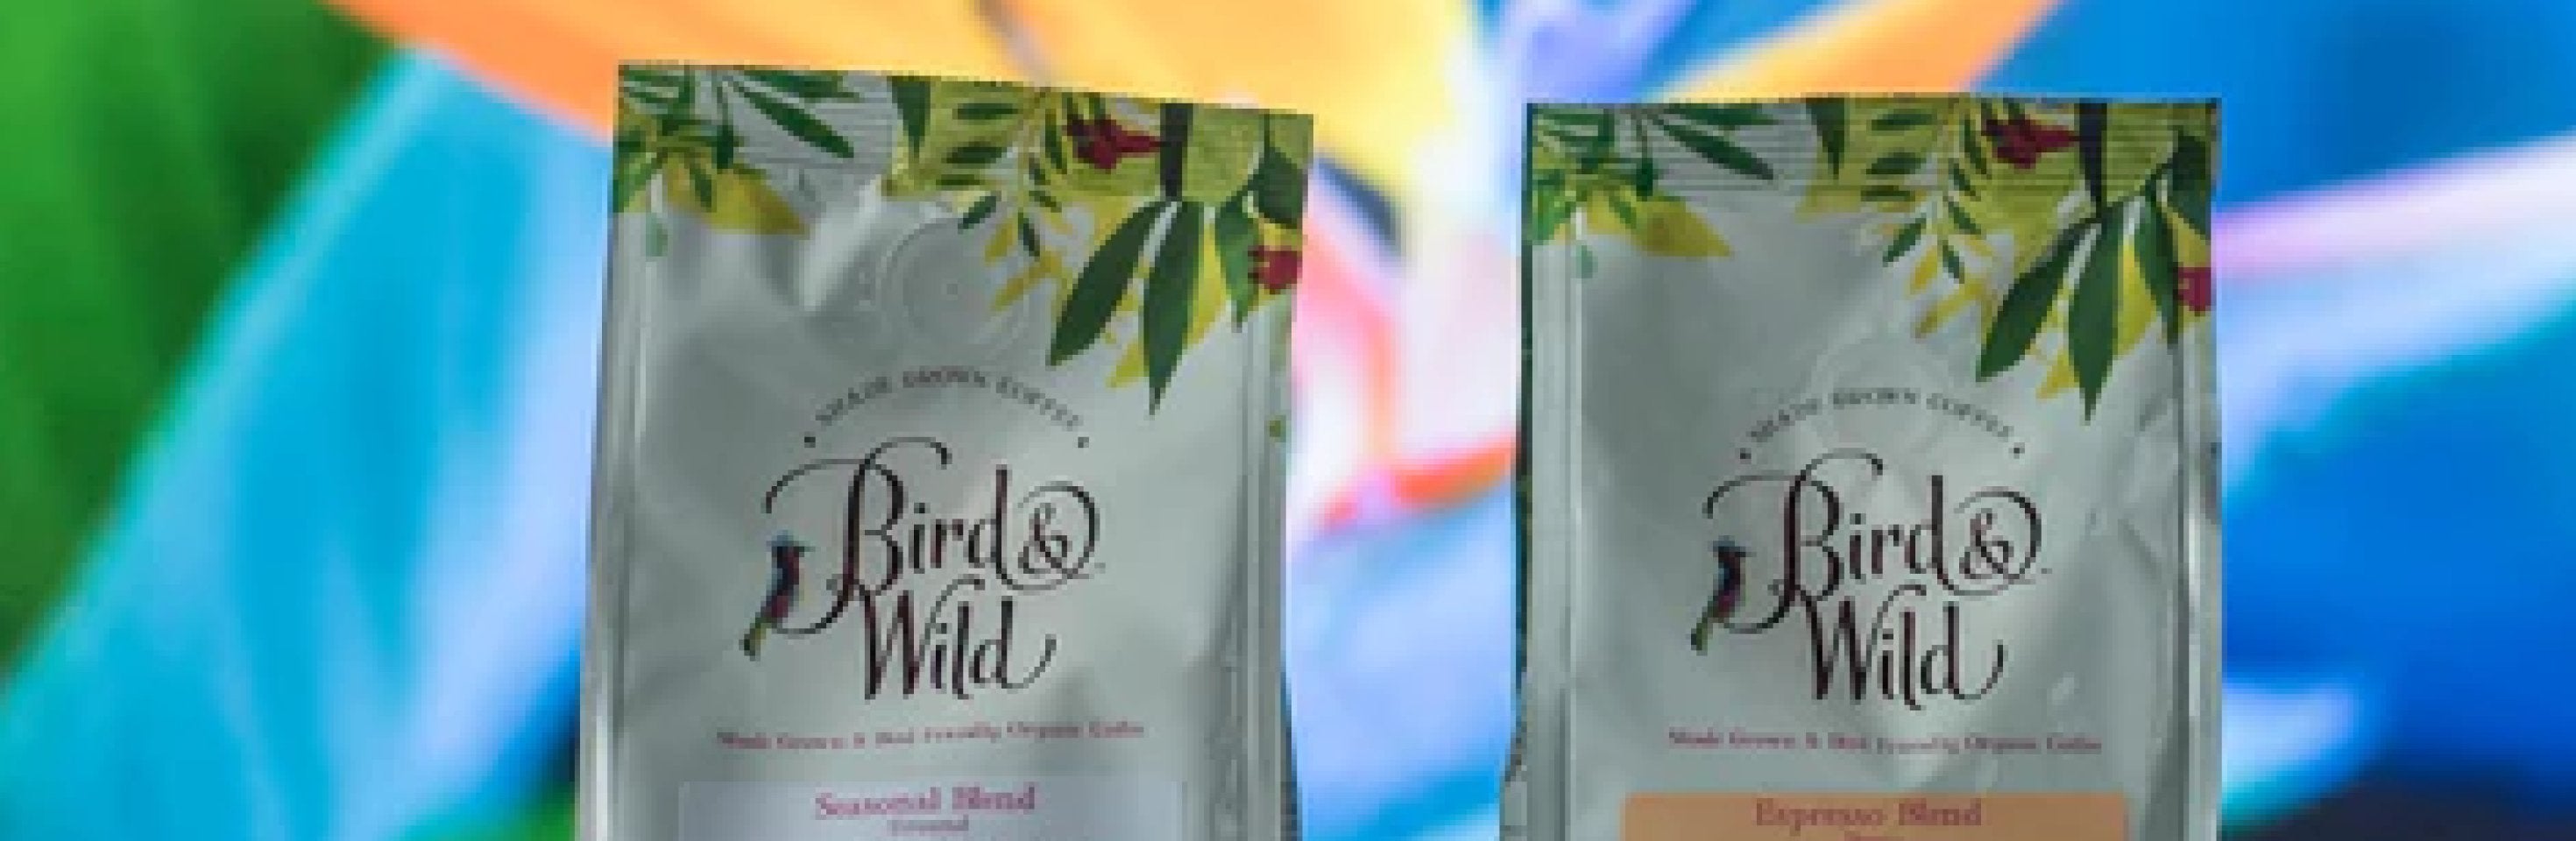 Bird & Wild wins Global Impact Award - UK sustainable awards - Bird & Wild Coffee